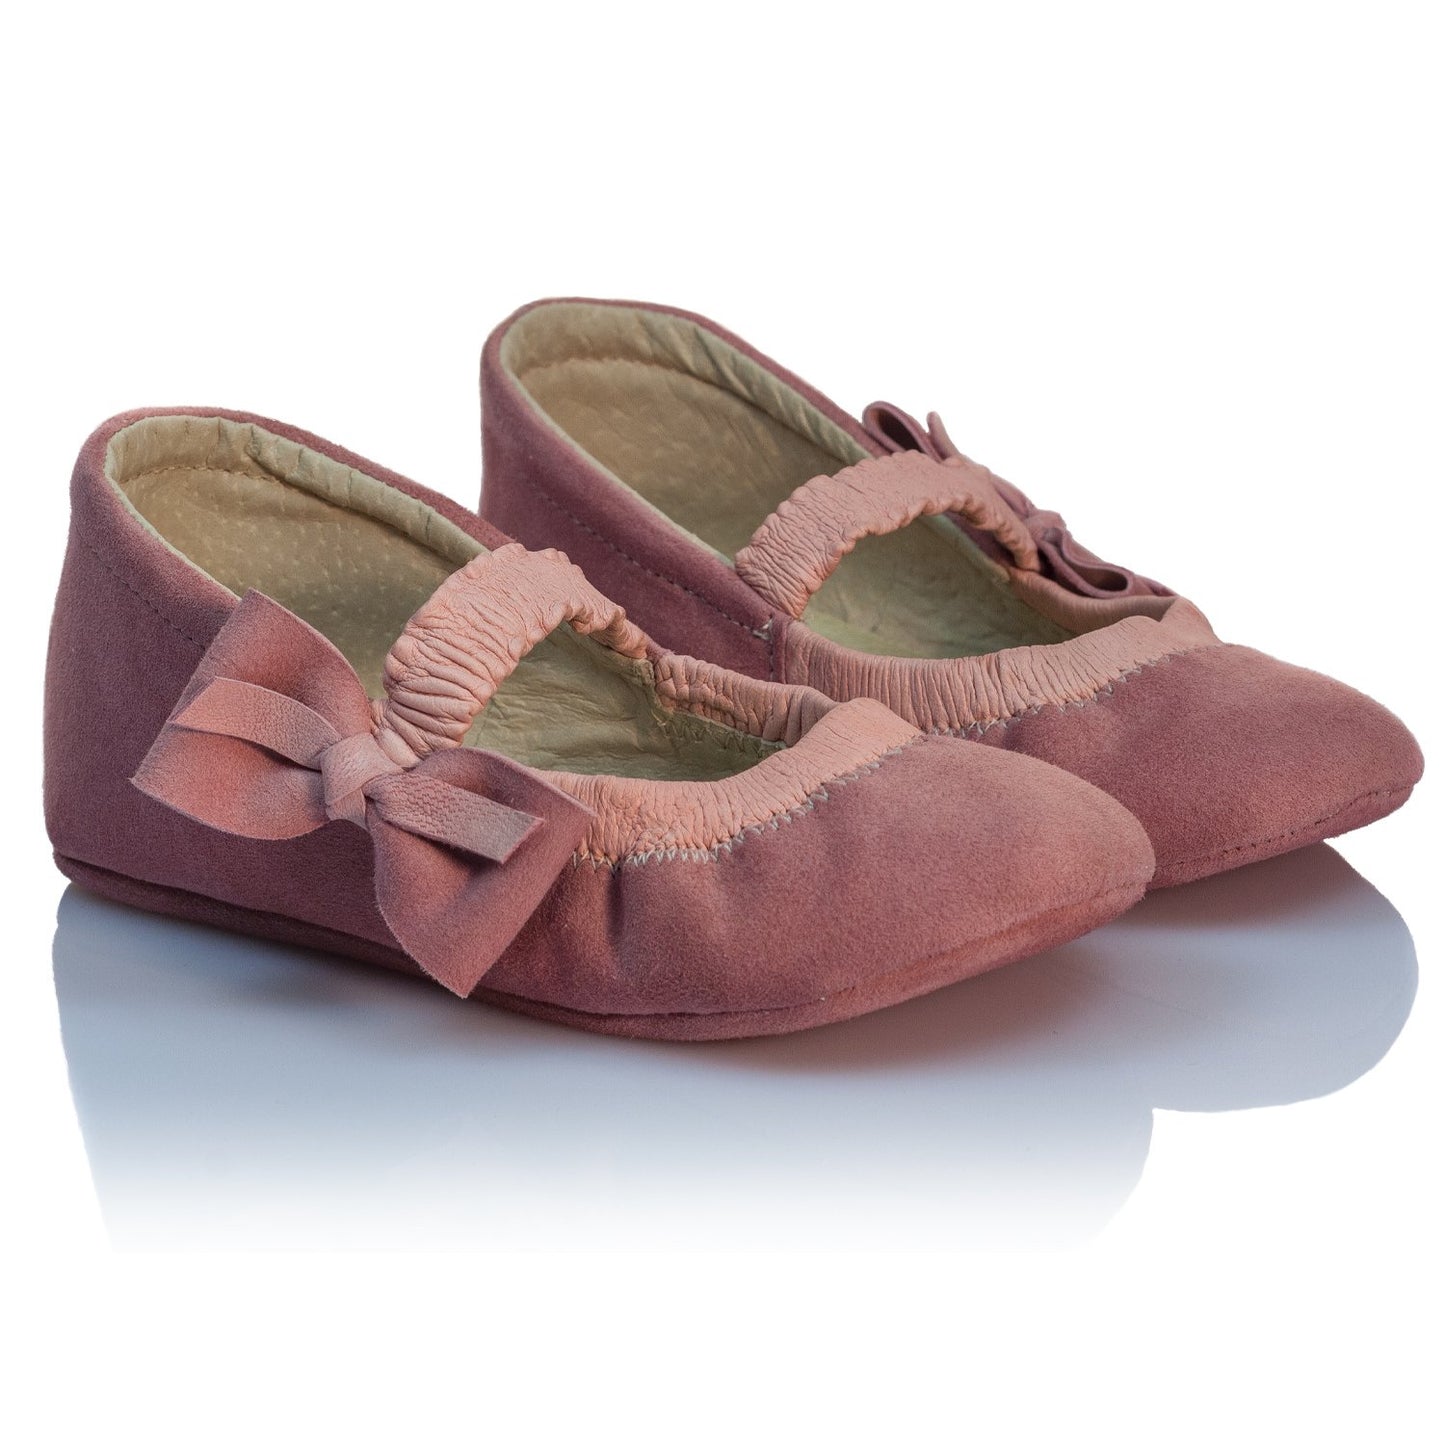 Vibys Barefoot Ballerina Shoes - Kiki Ballerina - pair view